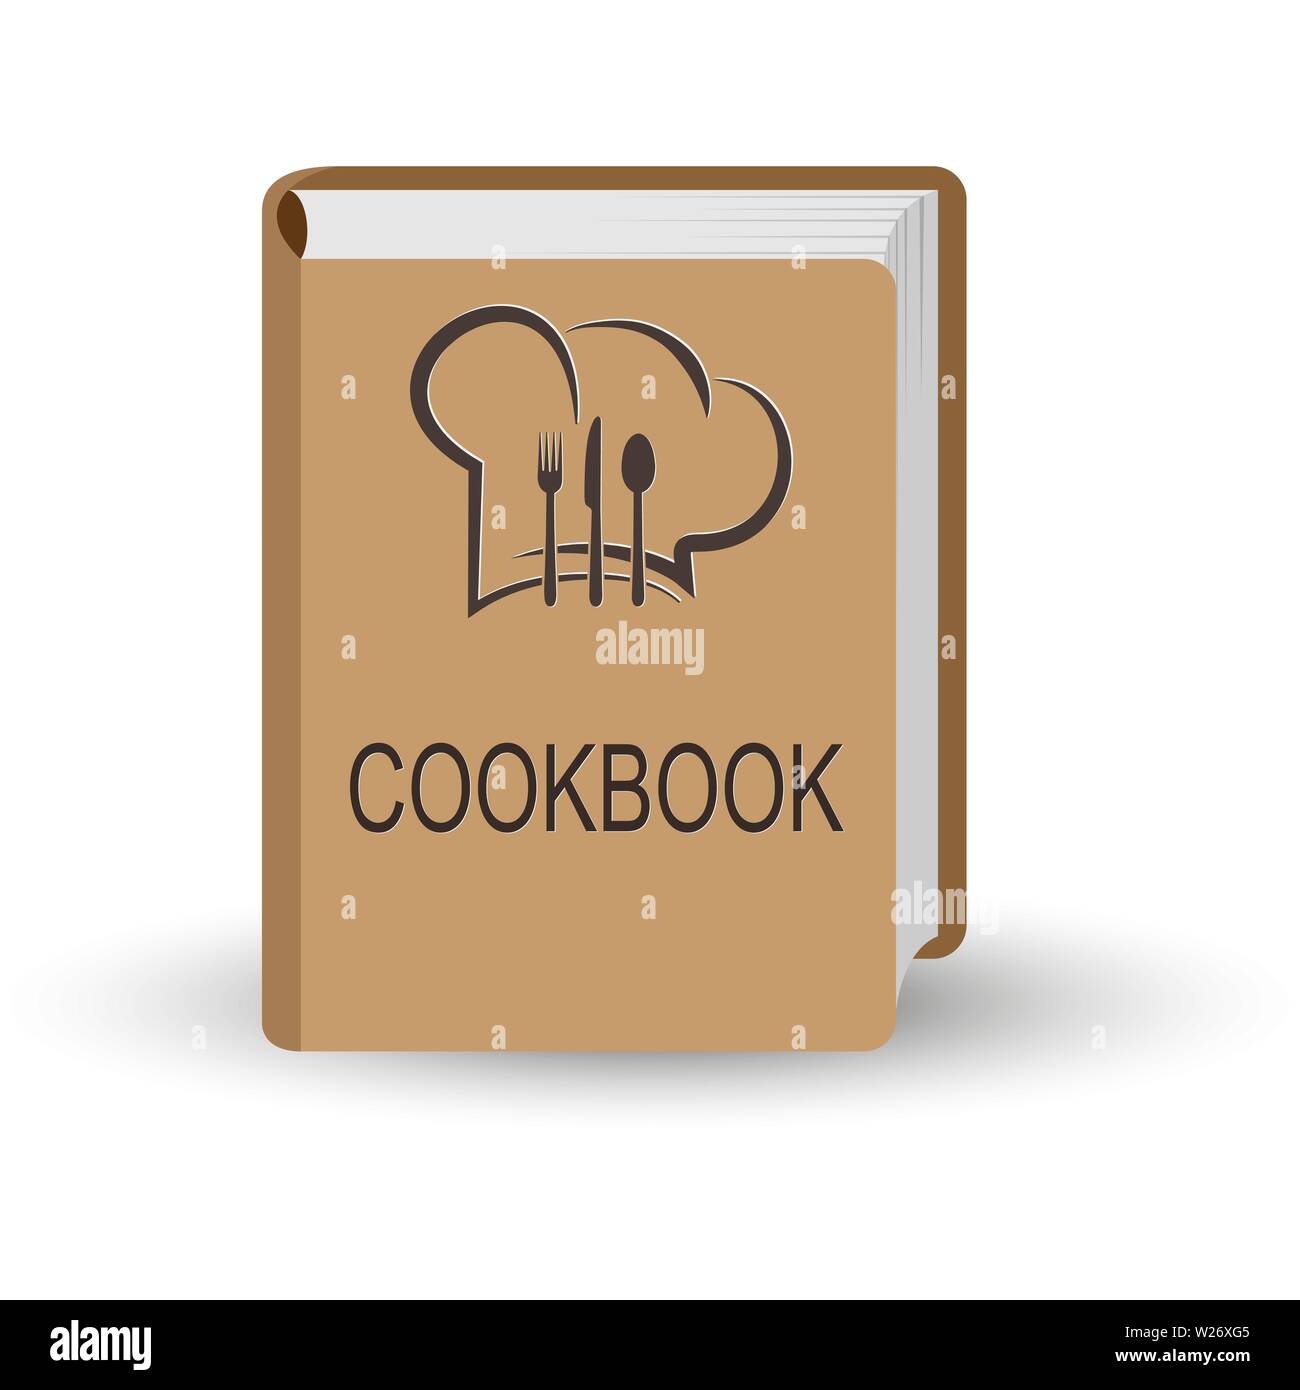 https://c8.alamy.com/comp/W26XG5/book-with-the-word-cookbook-3d-volume-simulation-W26XG5.jpg